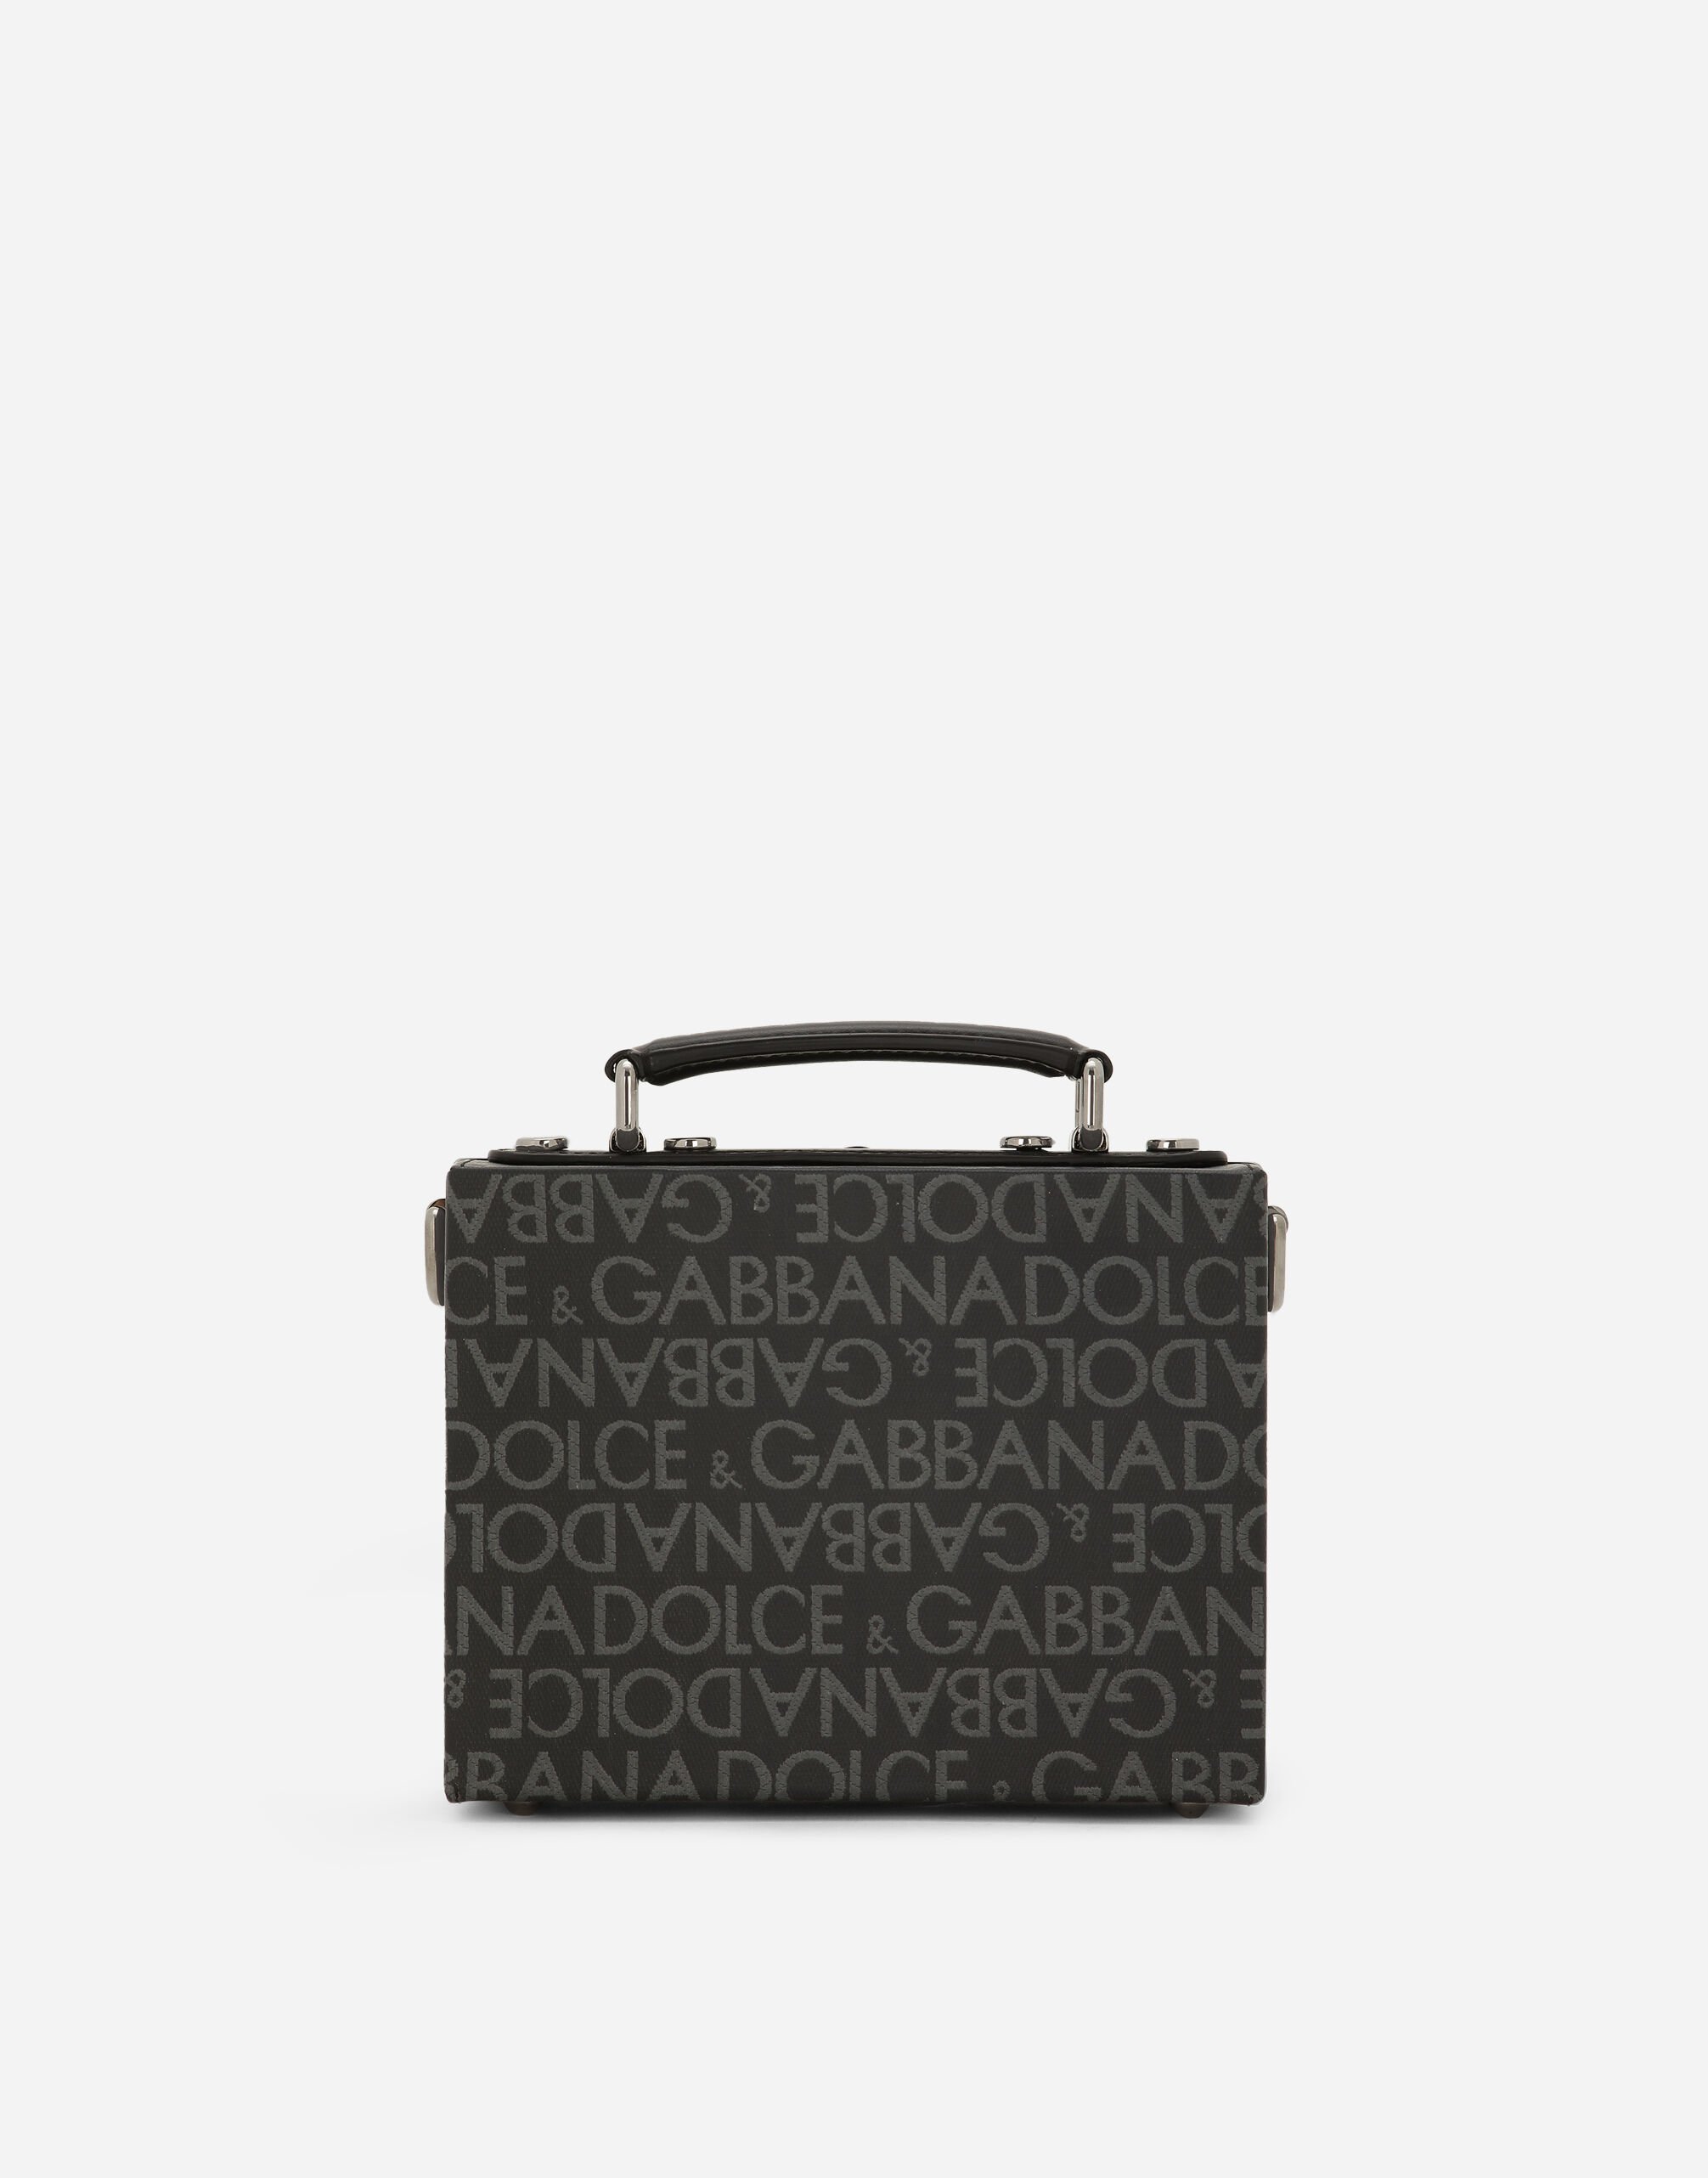 Dolce&Gabbana حقيبة بوكس جاكار مطلية أسود BM2123AQ437